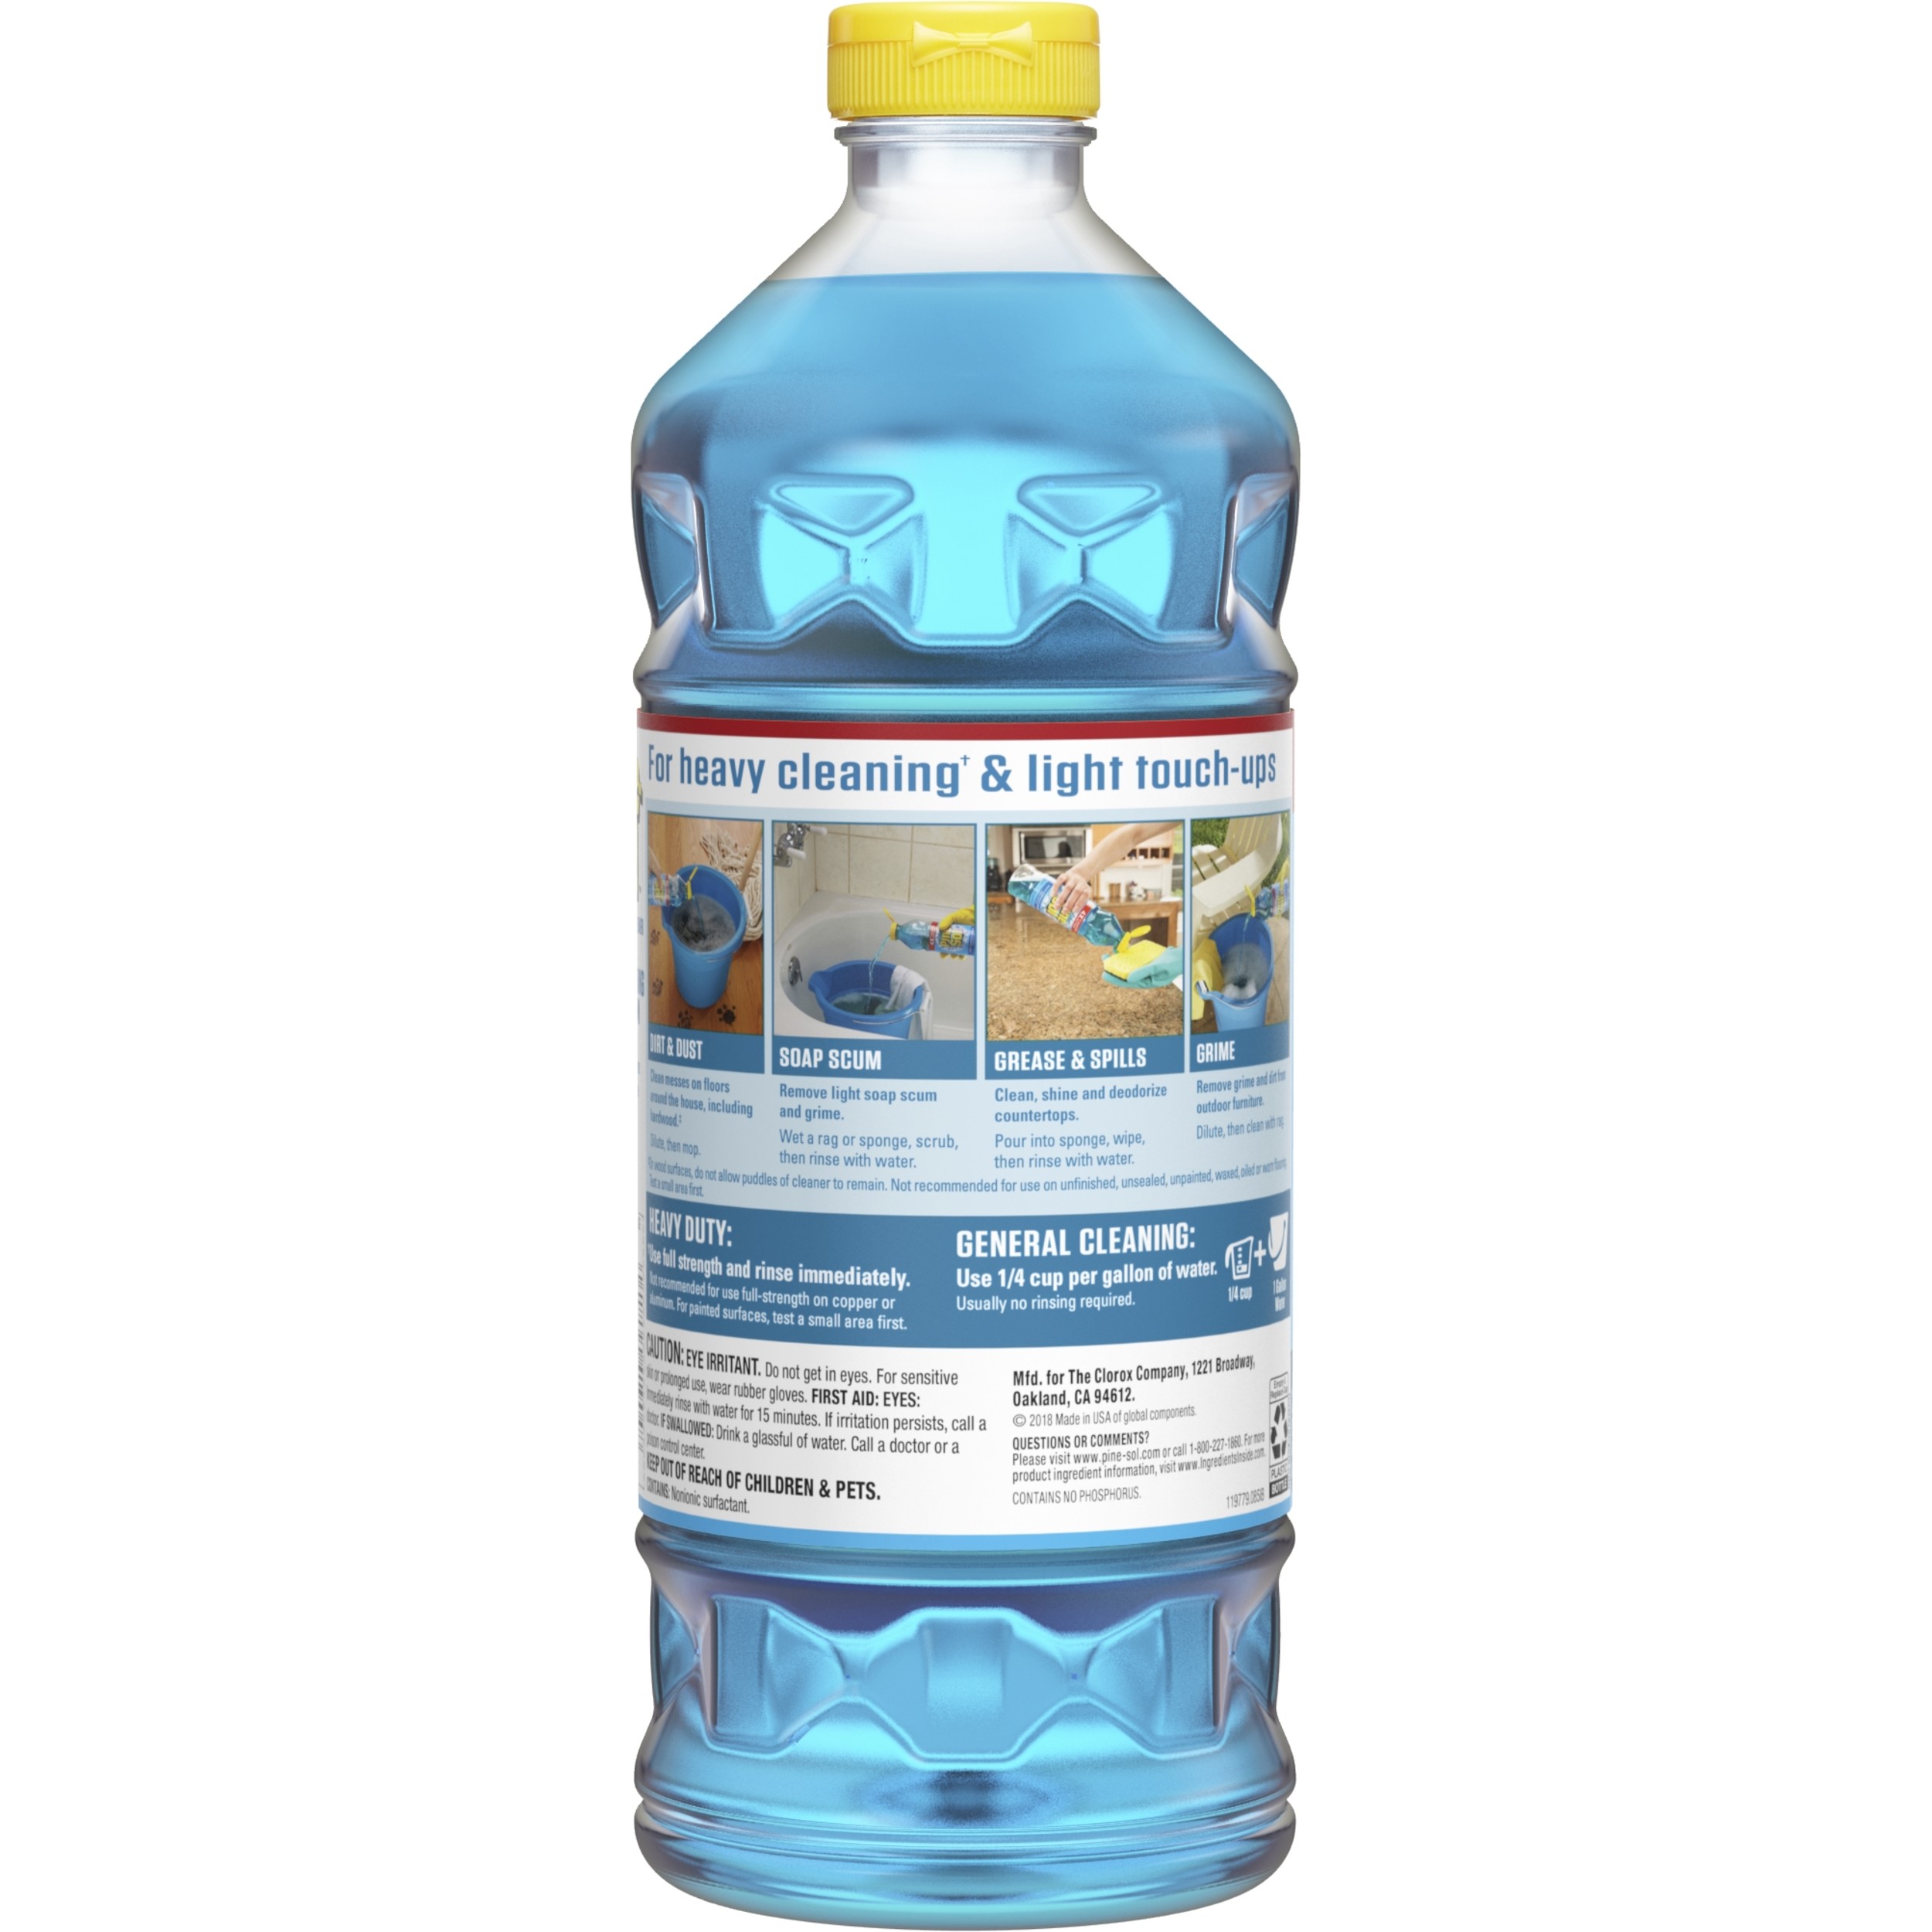 Pine-Sol All Purpose Cleaner, Sparkling Wave, 48 oz Bottle - image 7 of 10